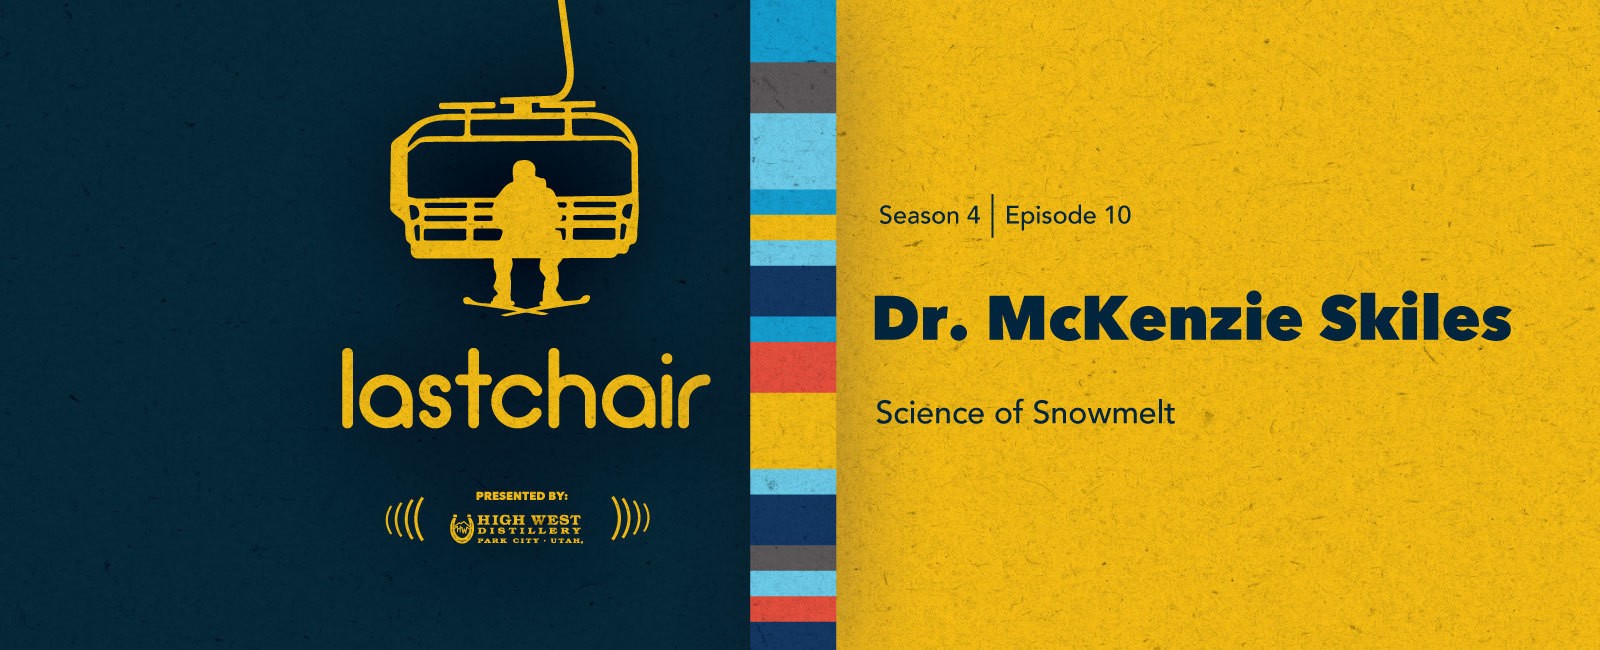 Dr. McKenzie Skiles: Science of Snowmelt